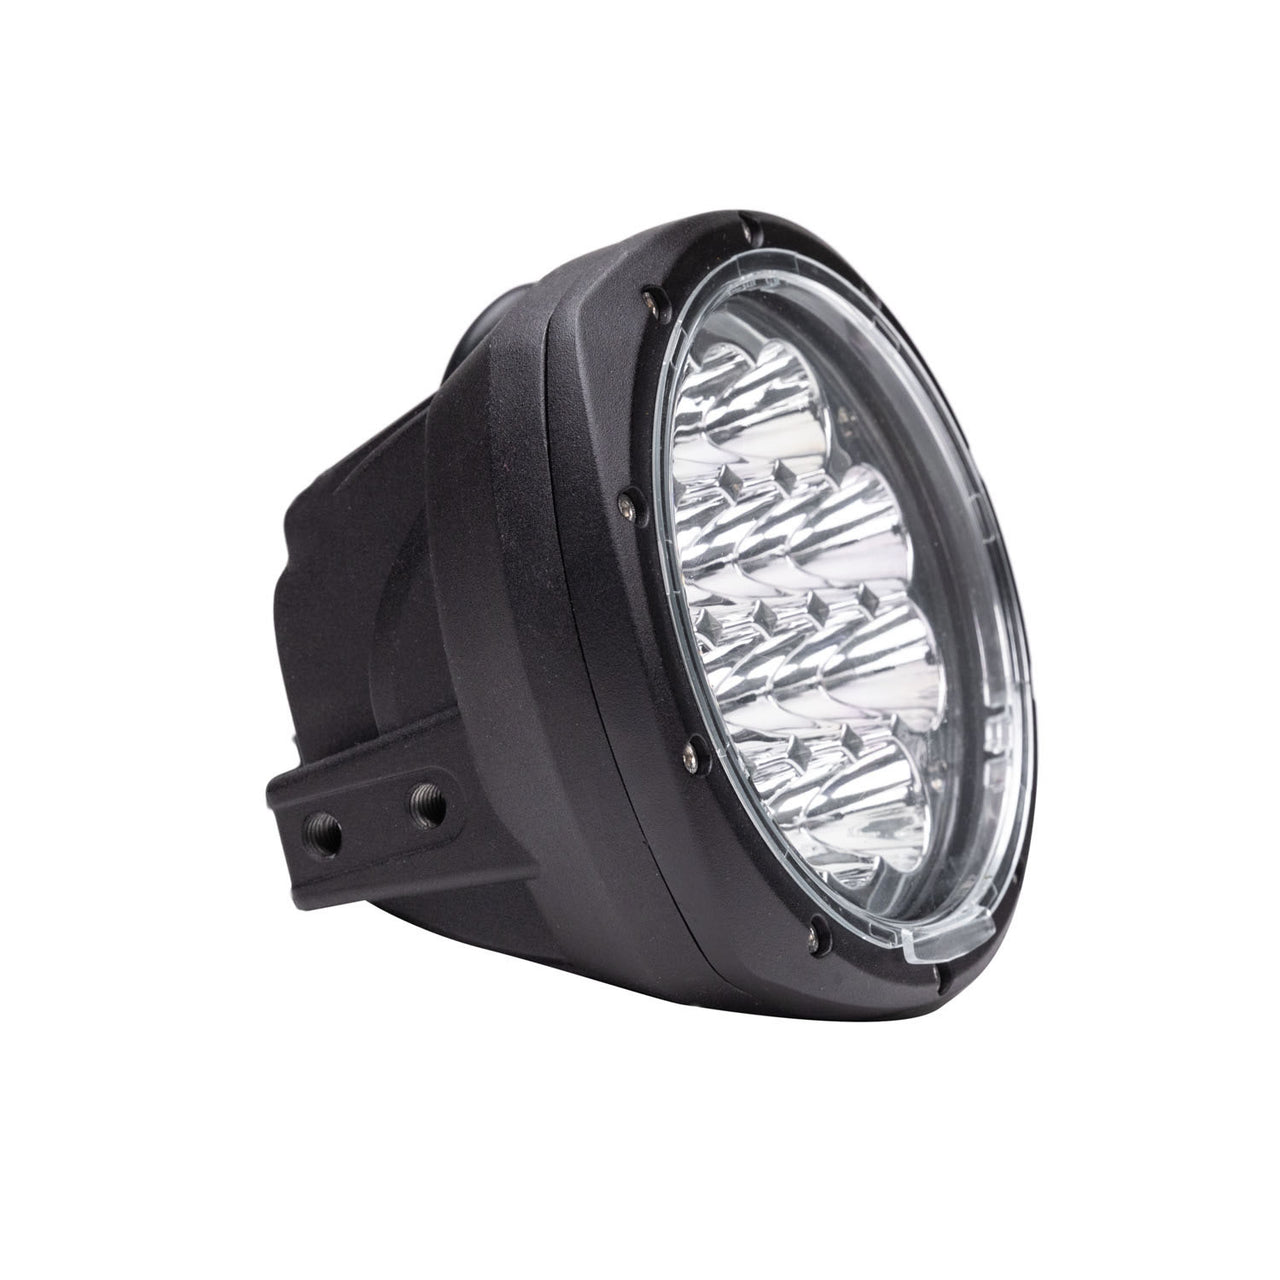 AUTOTEK ATO5RV1 5-inch Round LED Lights, outdoor rated 7,200 lumen.